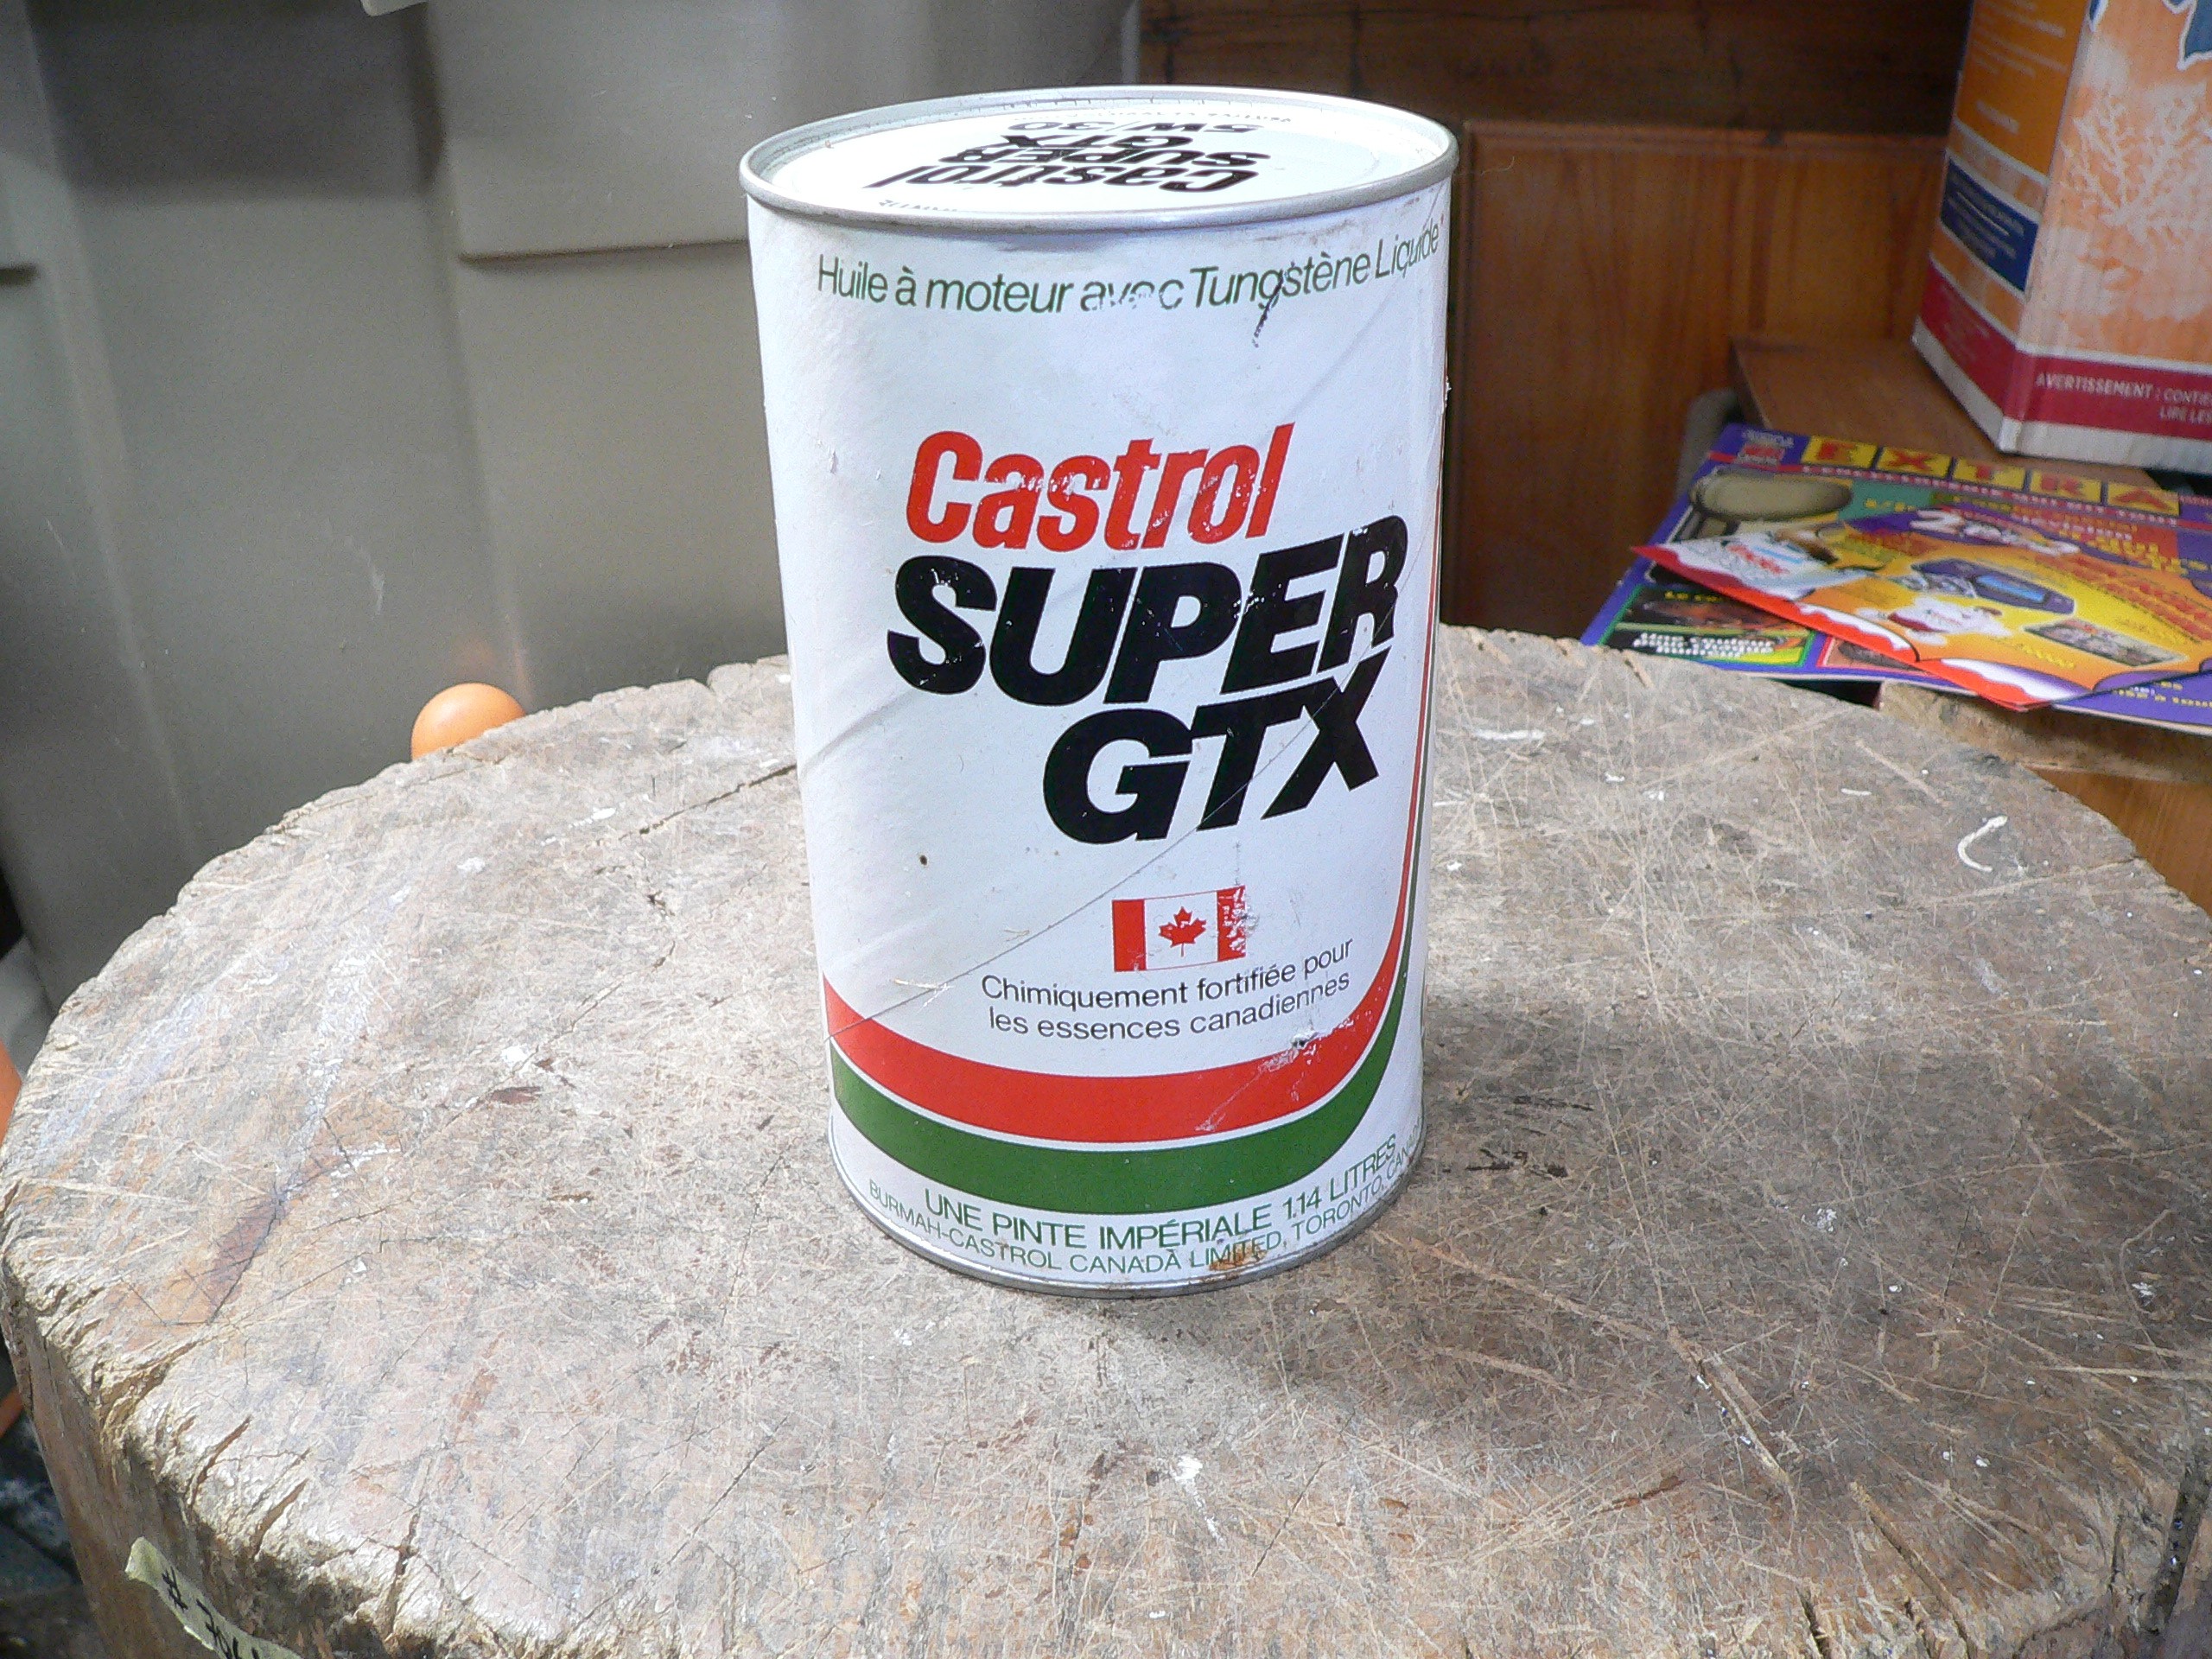 Canne d'huile castrol super gtx # 10979.9